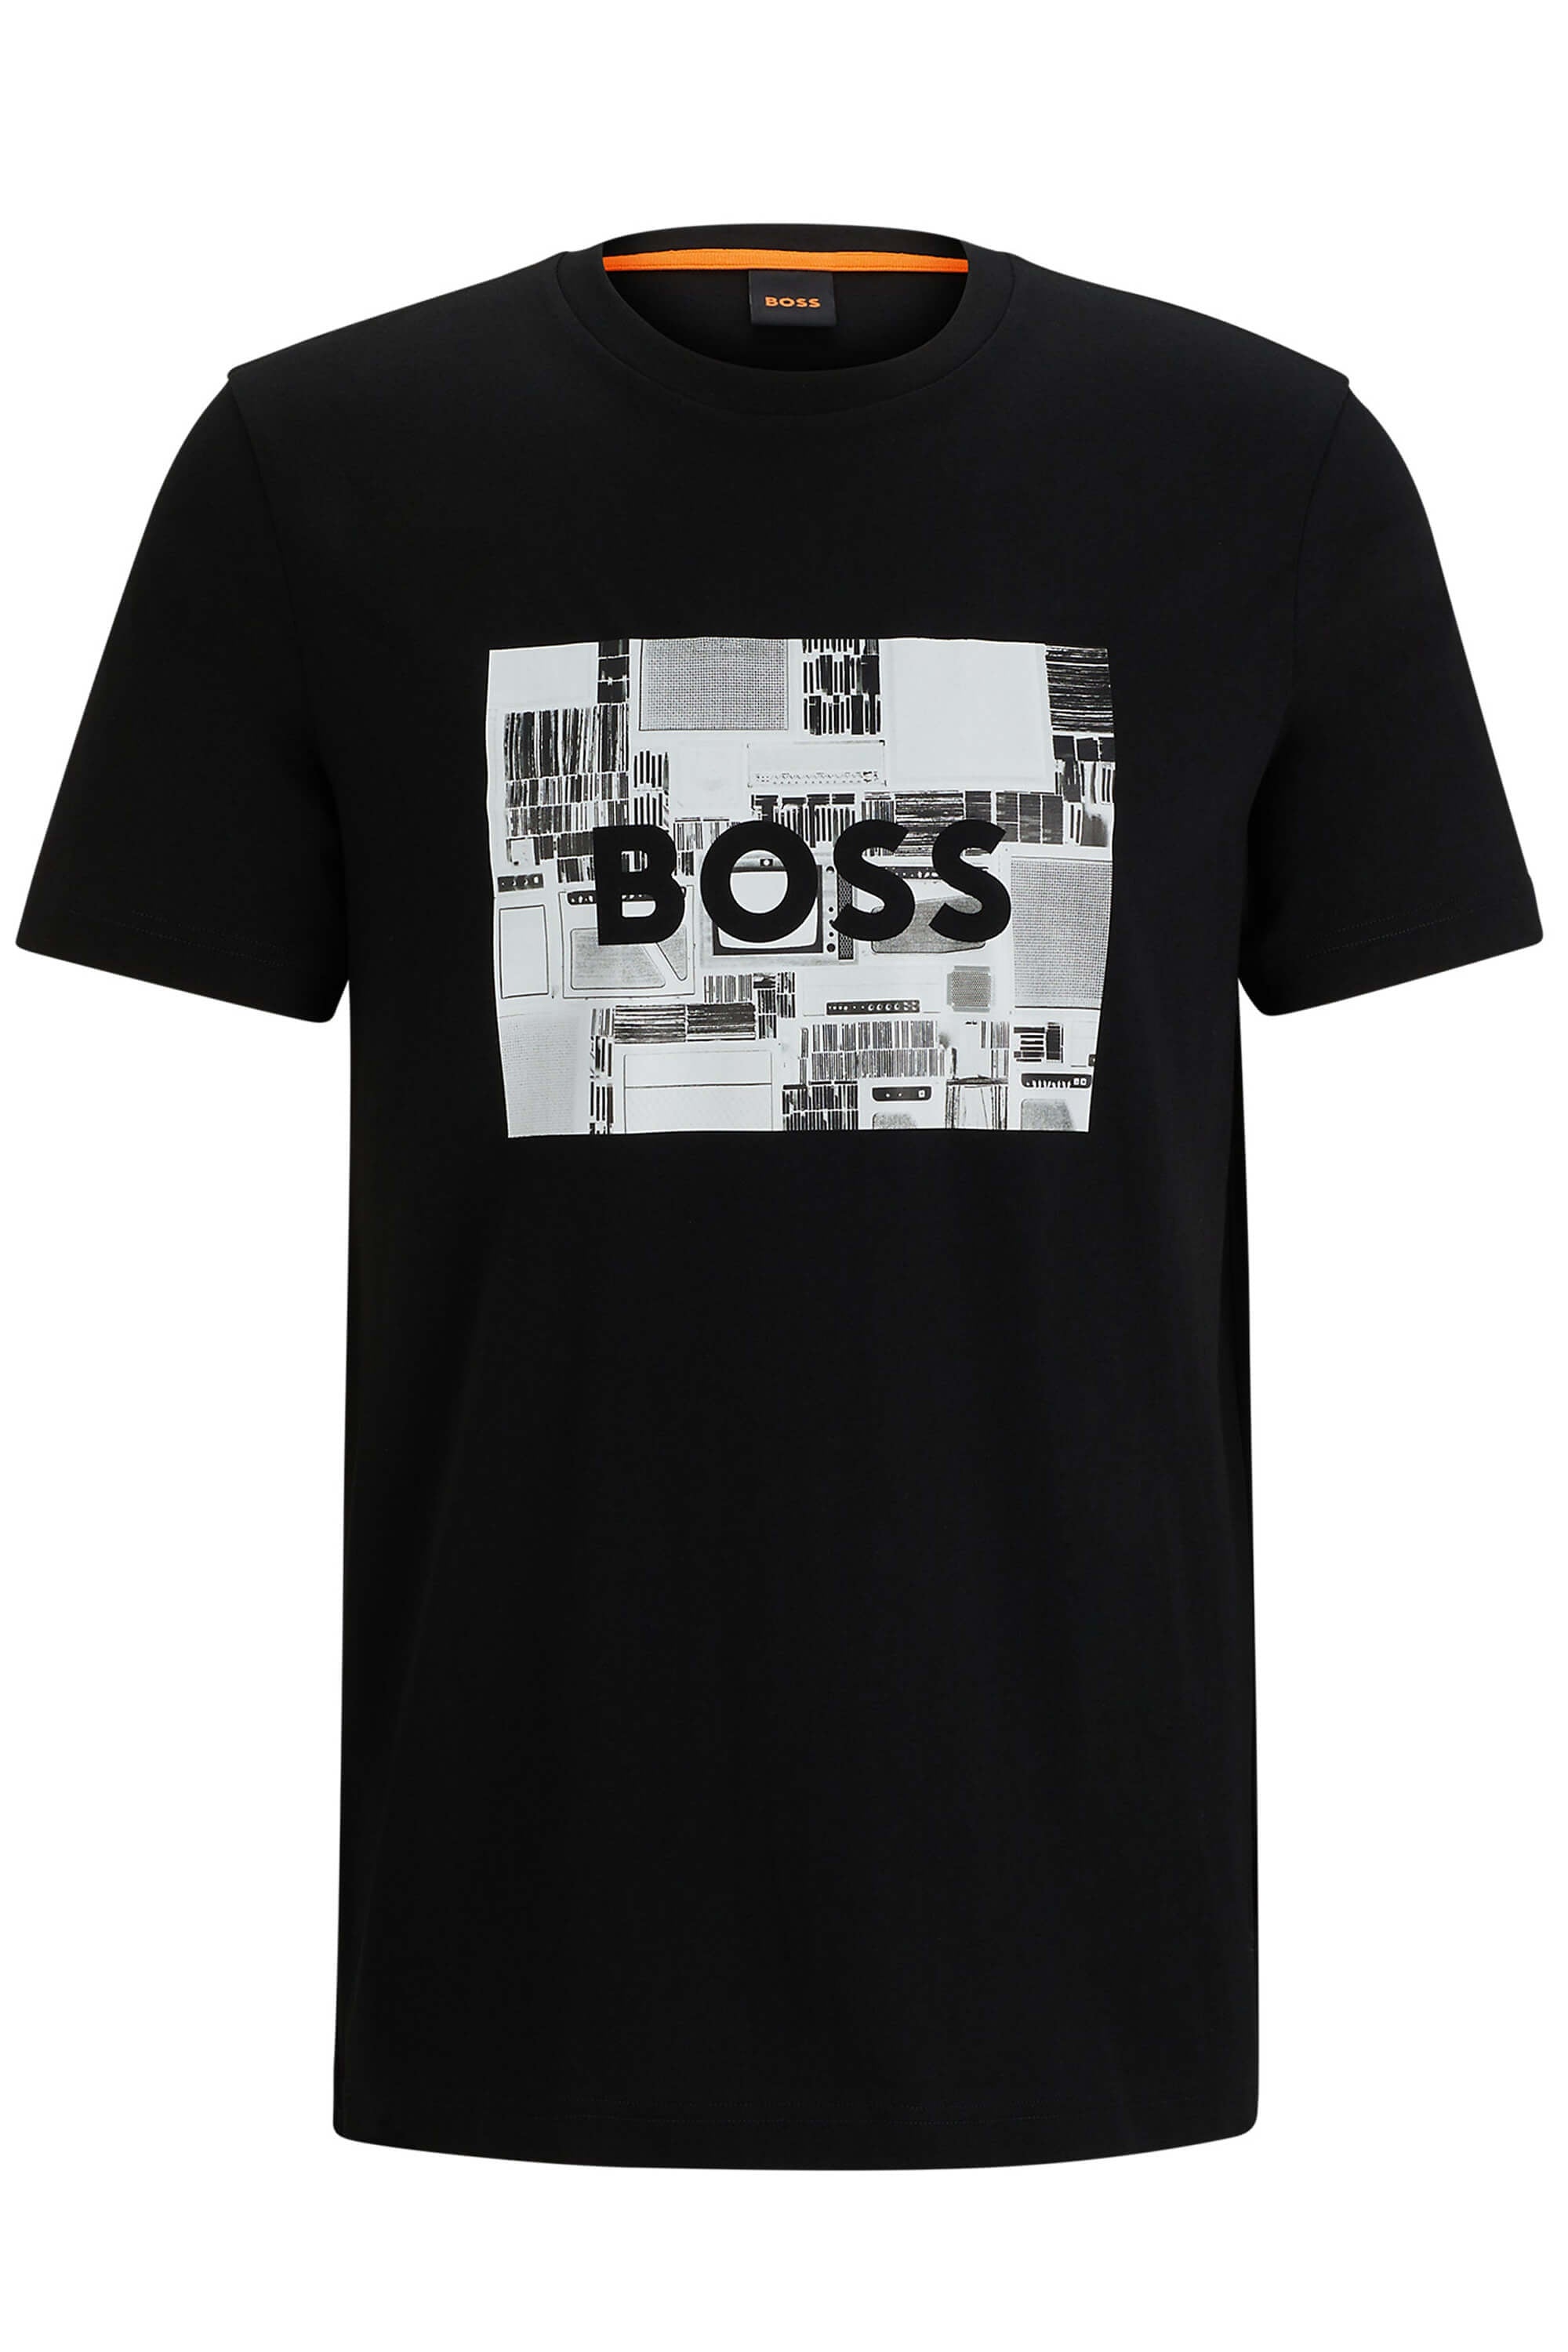 Hugo Boss TeeHeavyBoss T-Shirt